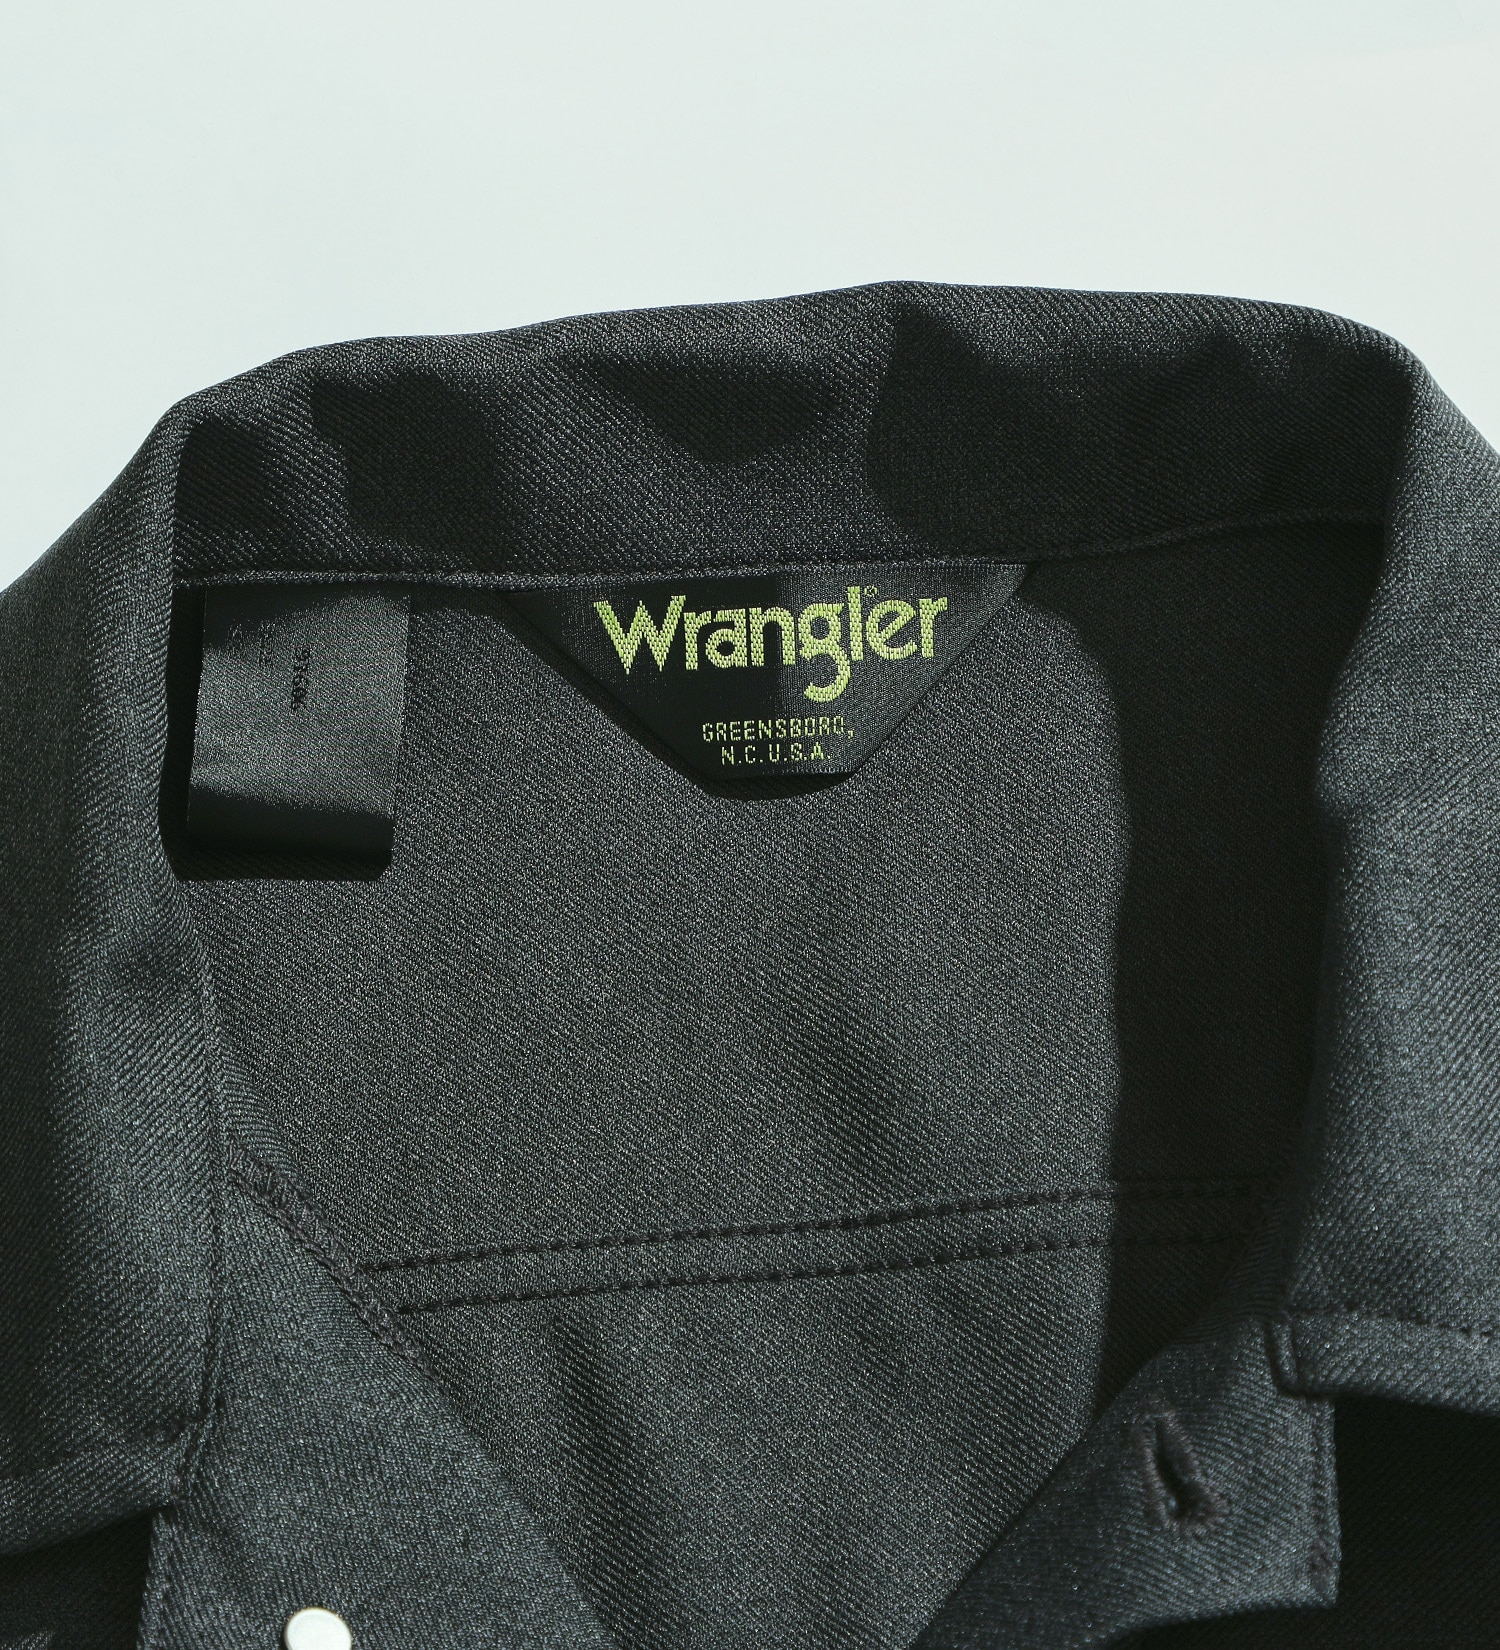 Wrangler(ラングラー)の【N.Hoolywood x WRANGLER】127MJ|ジャケット/アウター/その他アウター/メンズ|チャコールグレー